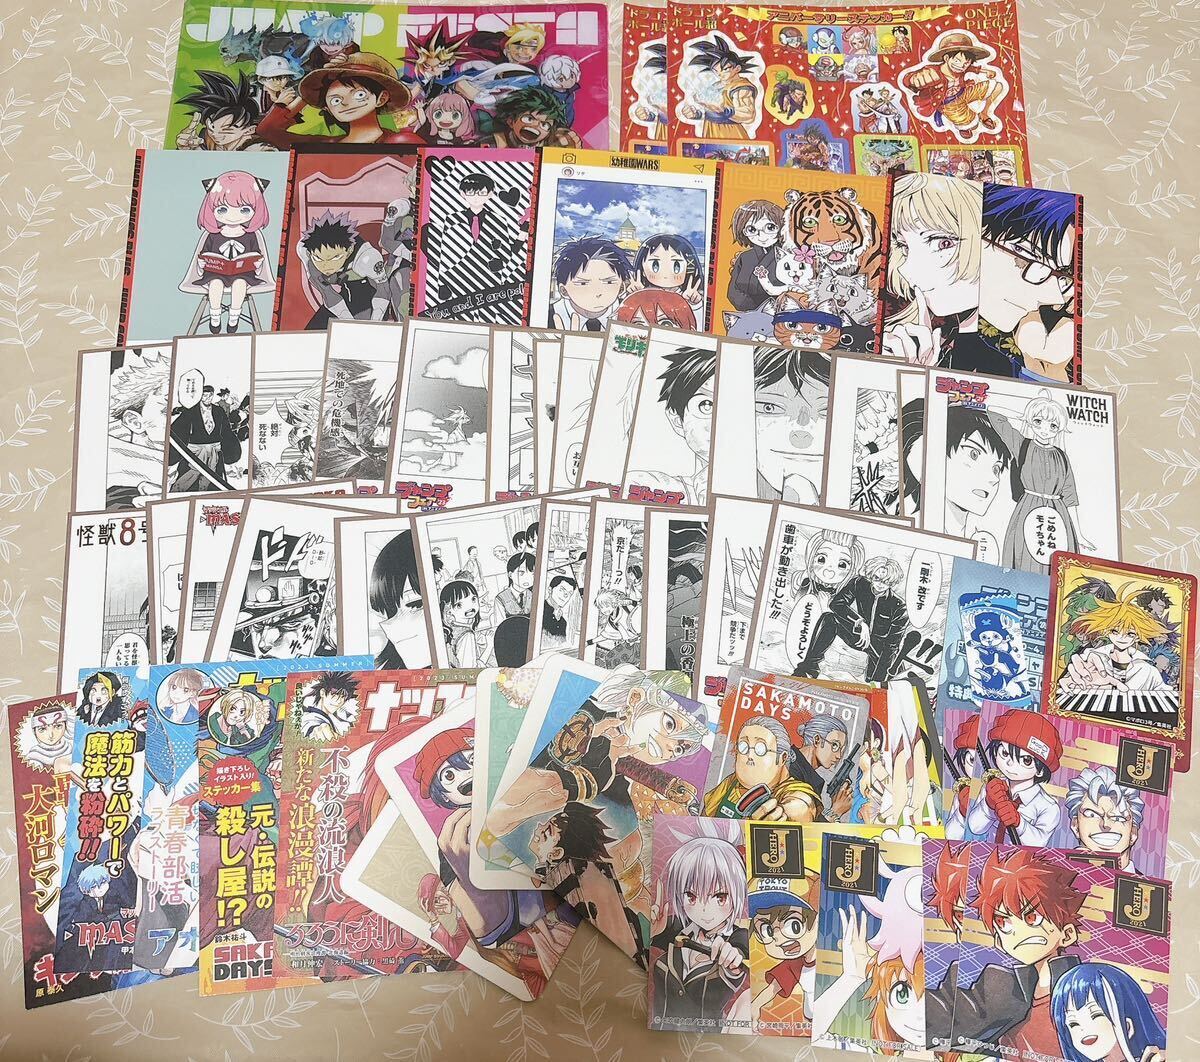 [ Shonen Jump ] sticker etc. 59 pieces set Mini square fancy cardboard fea privilege anime ito Haikyu!! JoJo's Bizarre Adventure ONEPIECE SPY×FAMILY